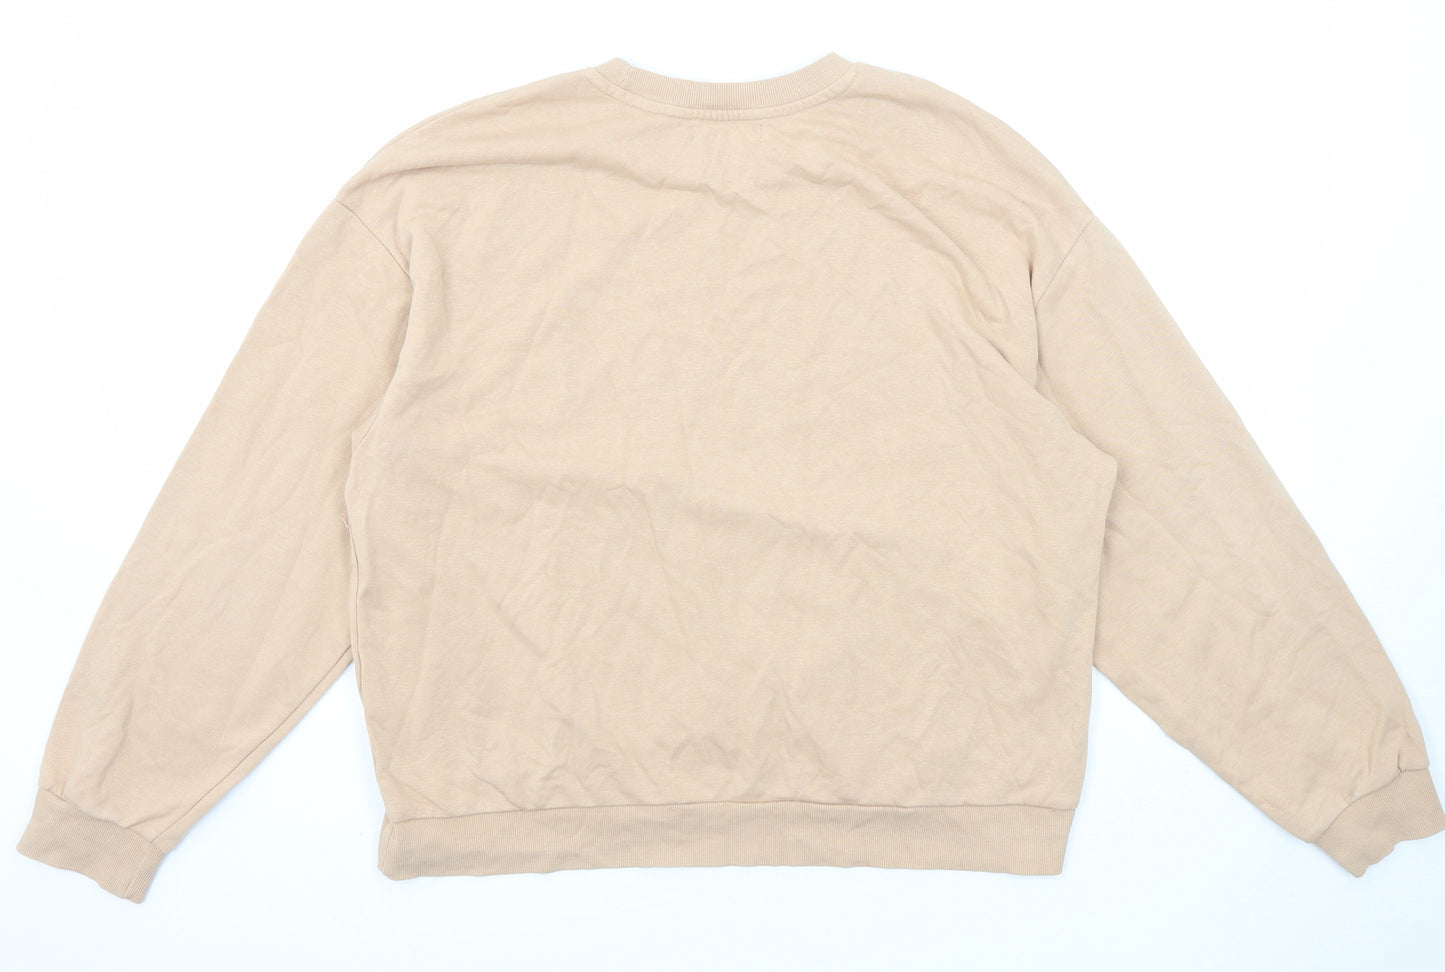 Bershka Womens Beige Cotton Pullover Sweatshirt Size L Pullover - Bad Choices Make Good Stories